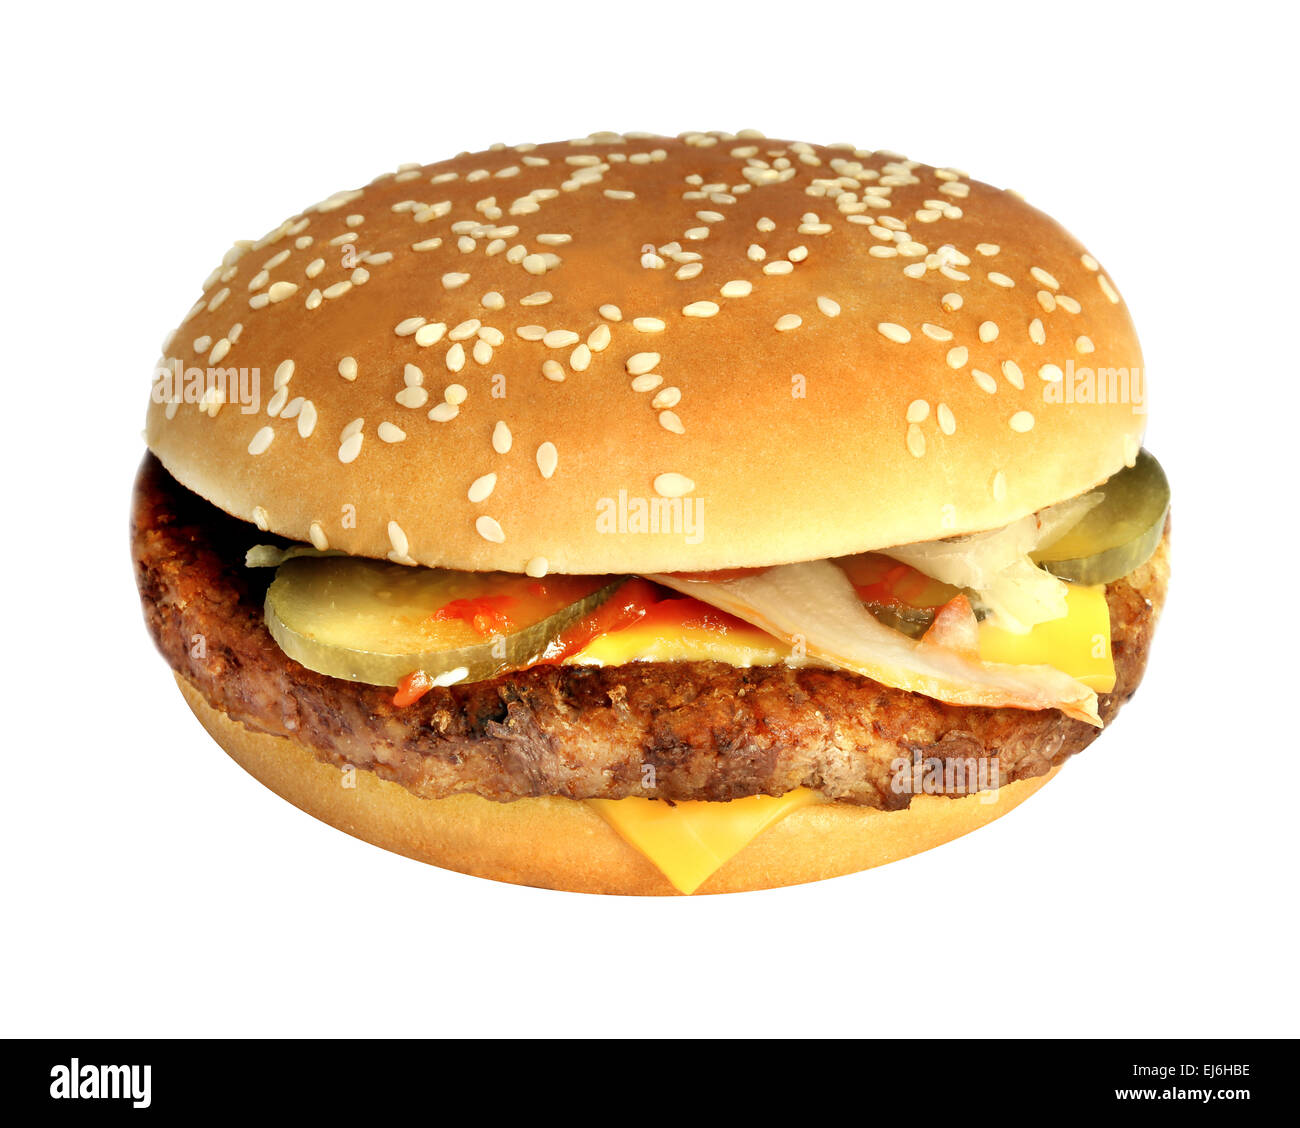 Big fresh delicious hamburger on a white background Stock Photo